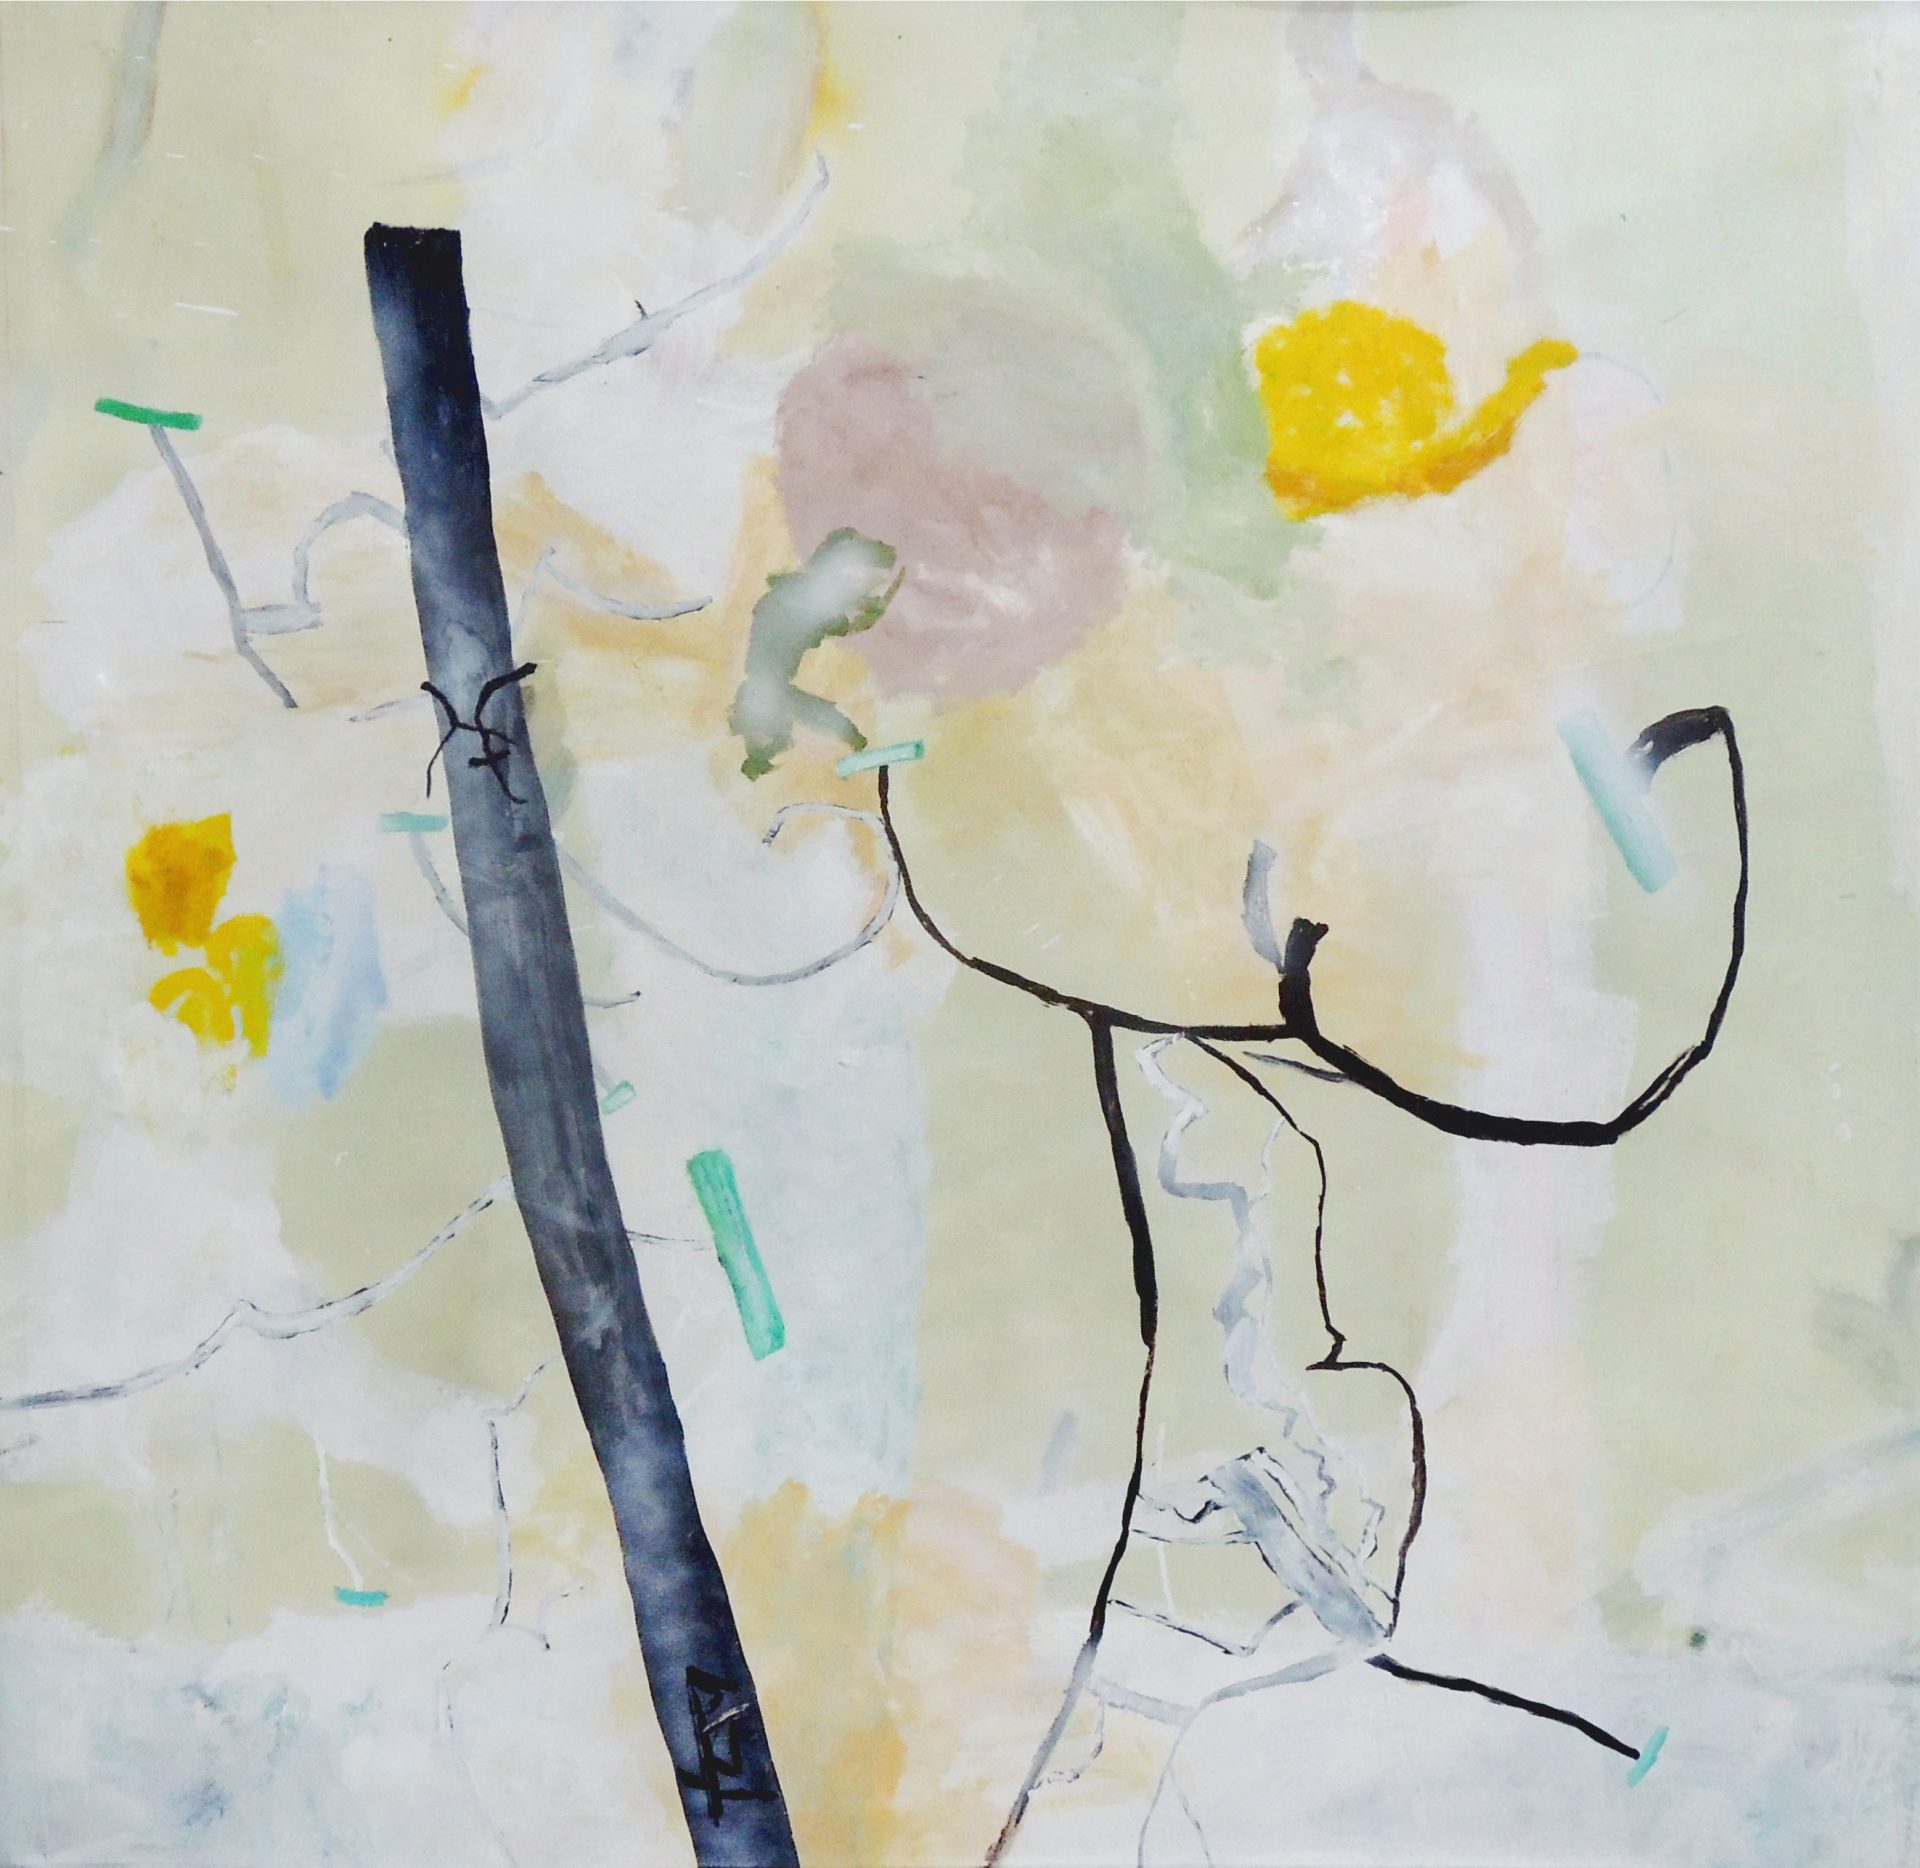 C-林亦軒 Lin YiHsuan, 三月 March, 2020, 畫布油彩 oil on canvas, 126 x 120 cm